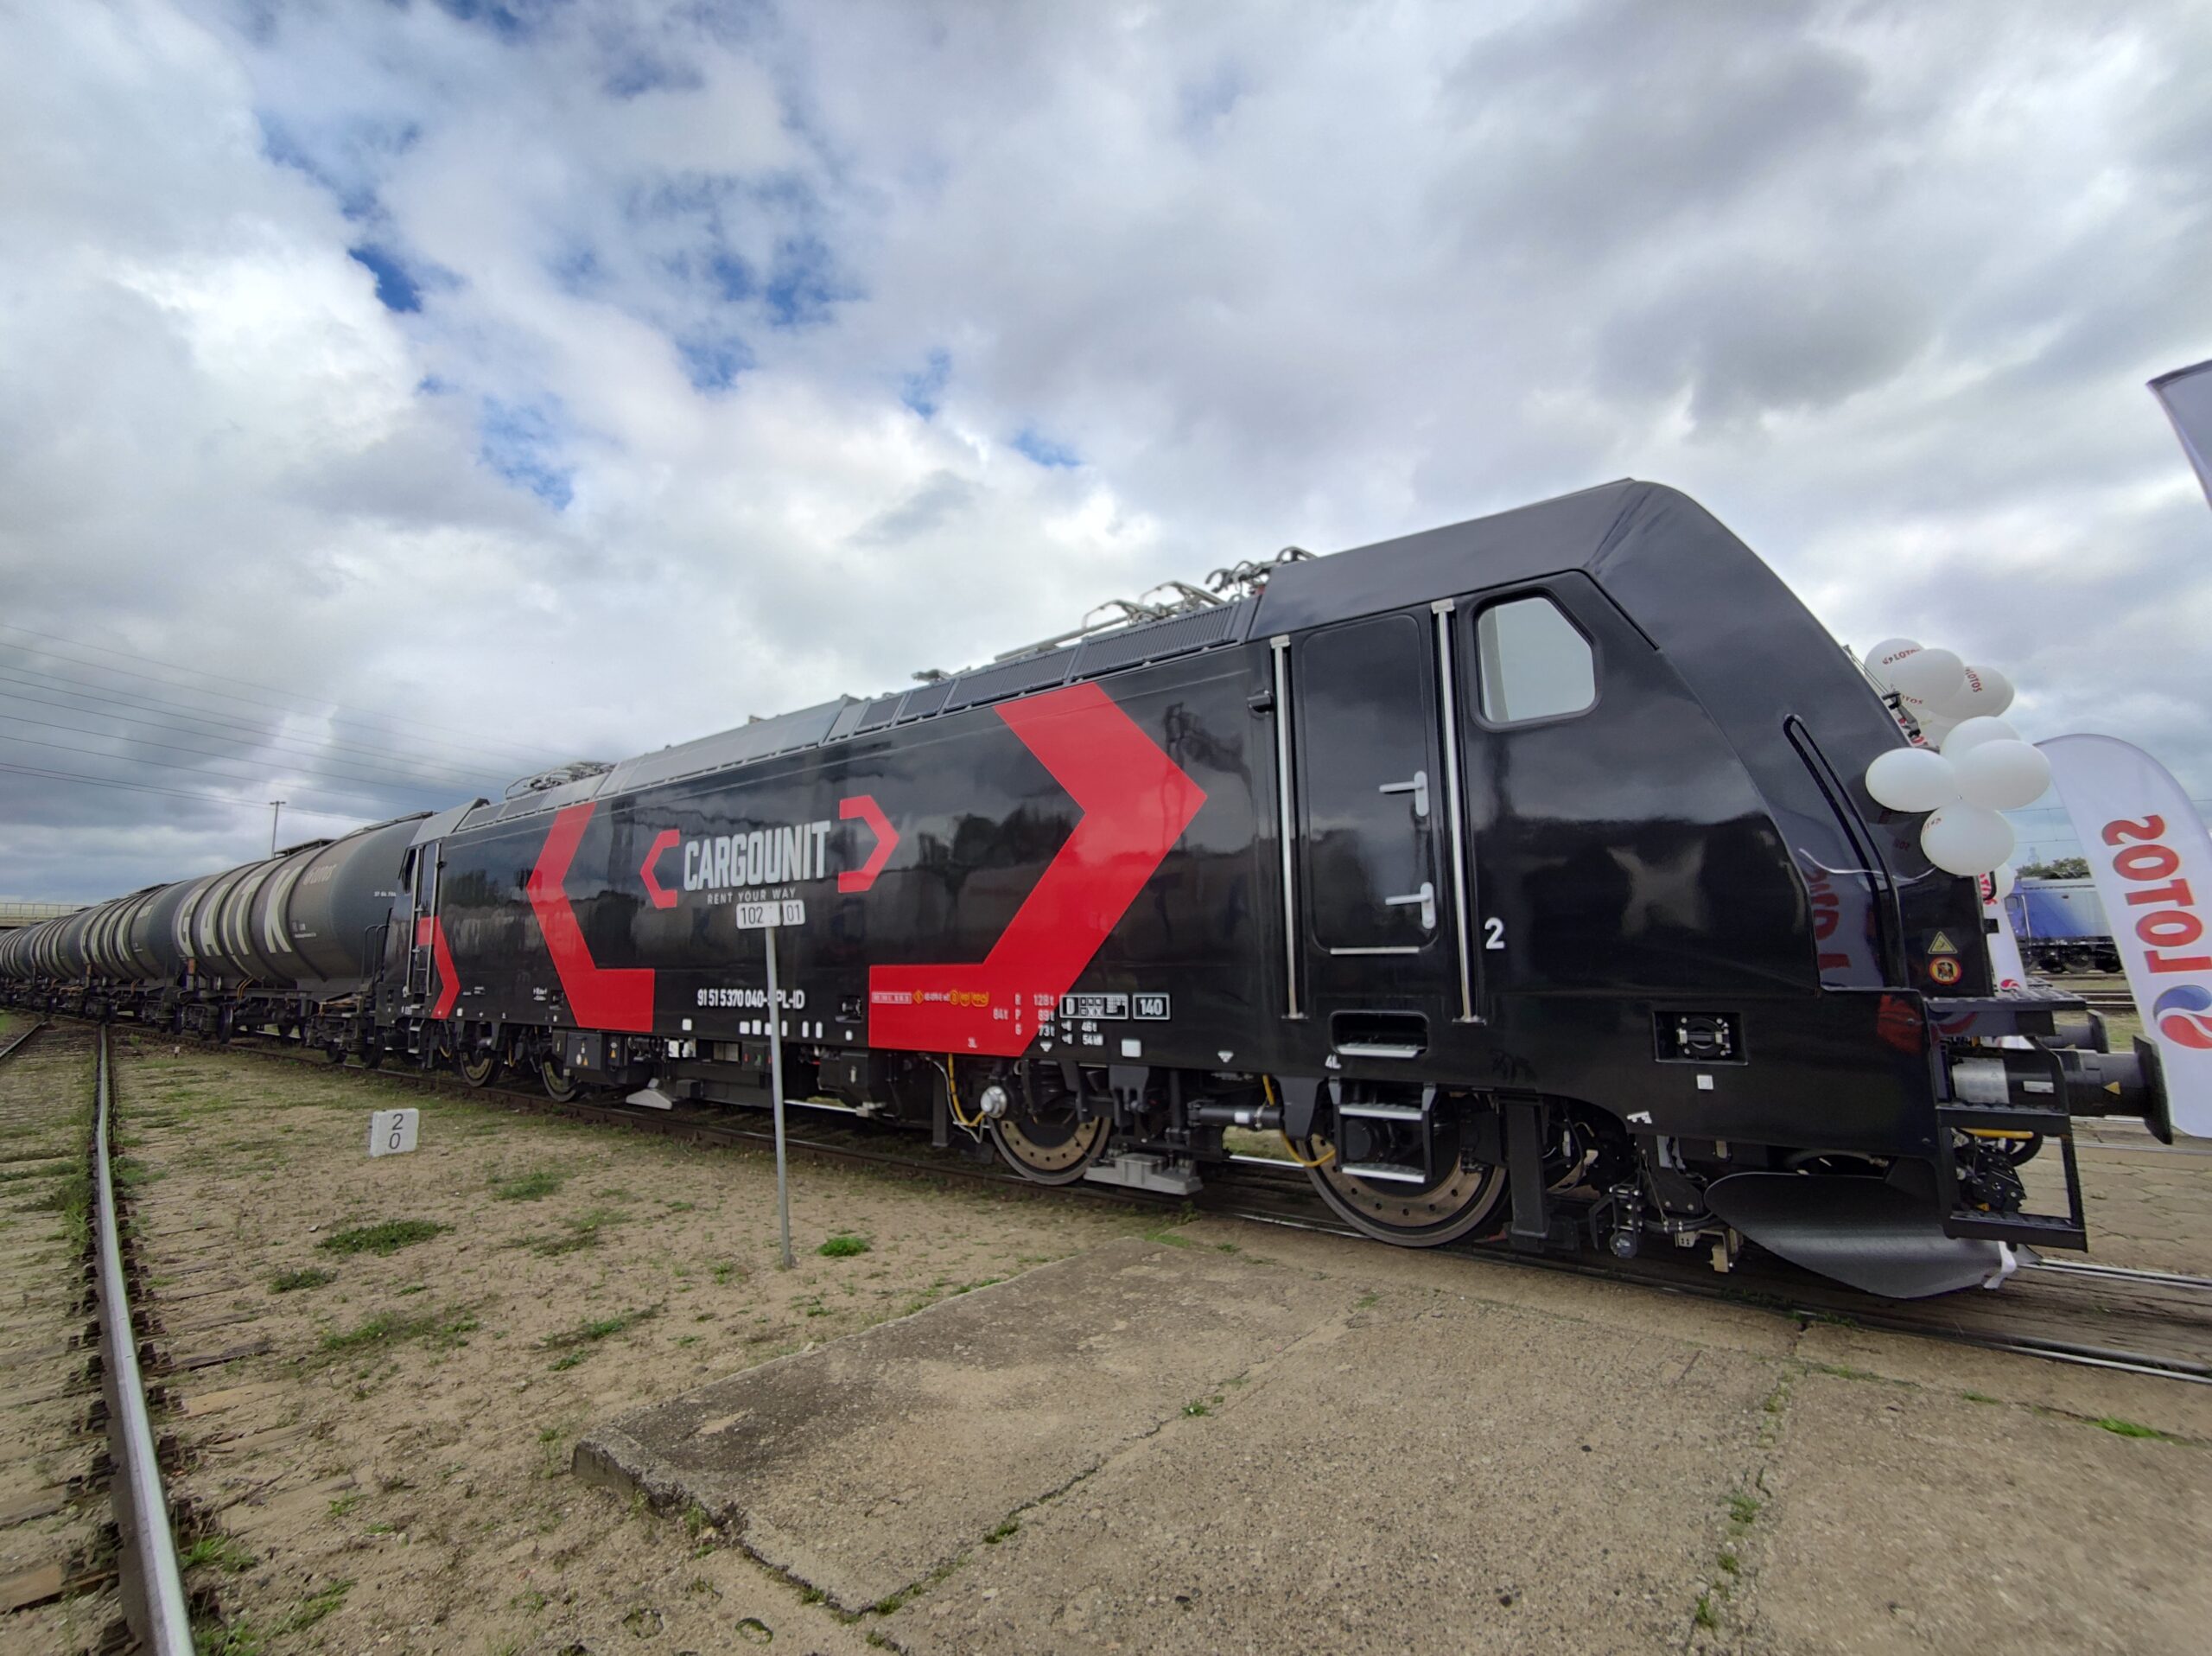 Bombardier TRAXX locomotive for CARGOUNIT